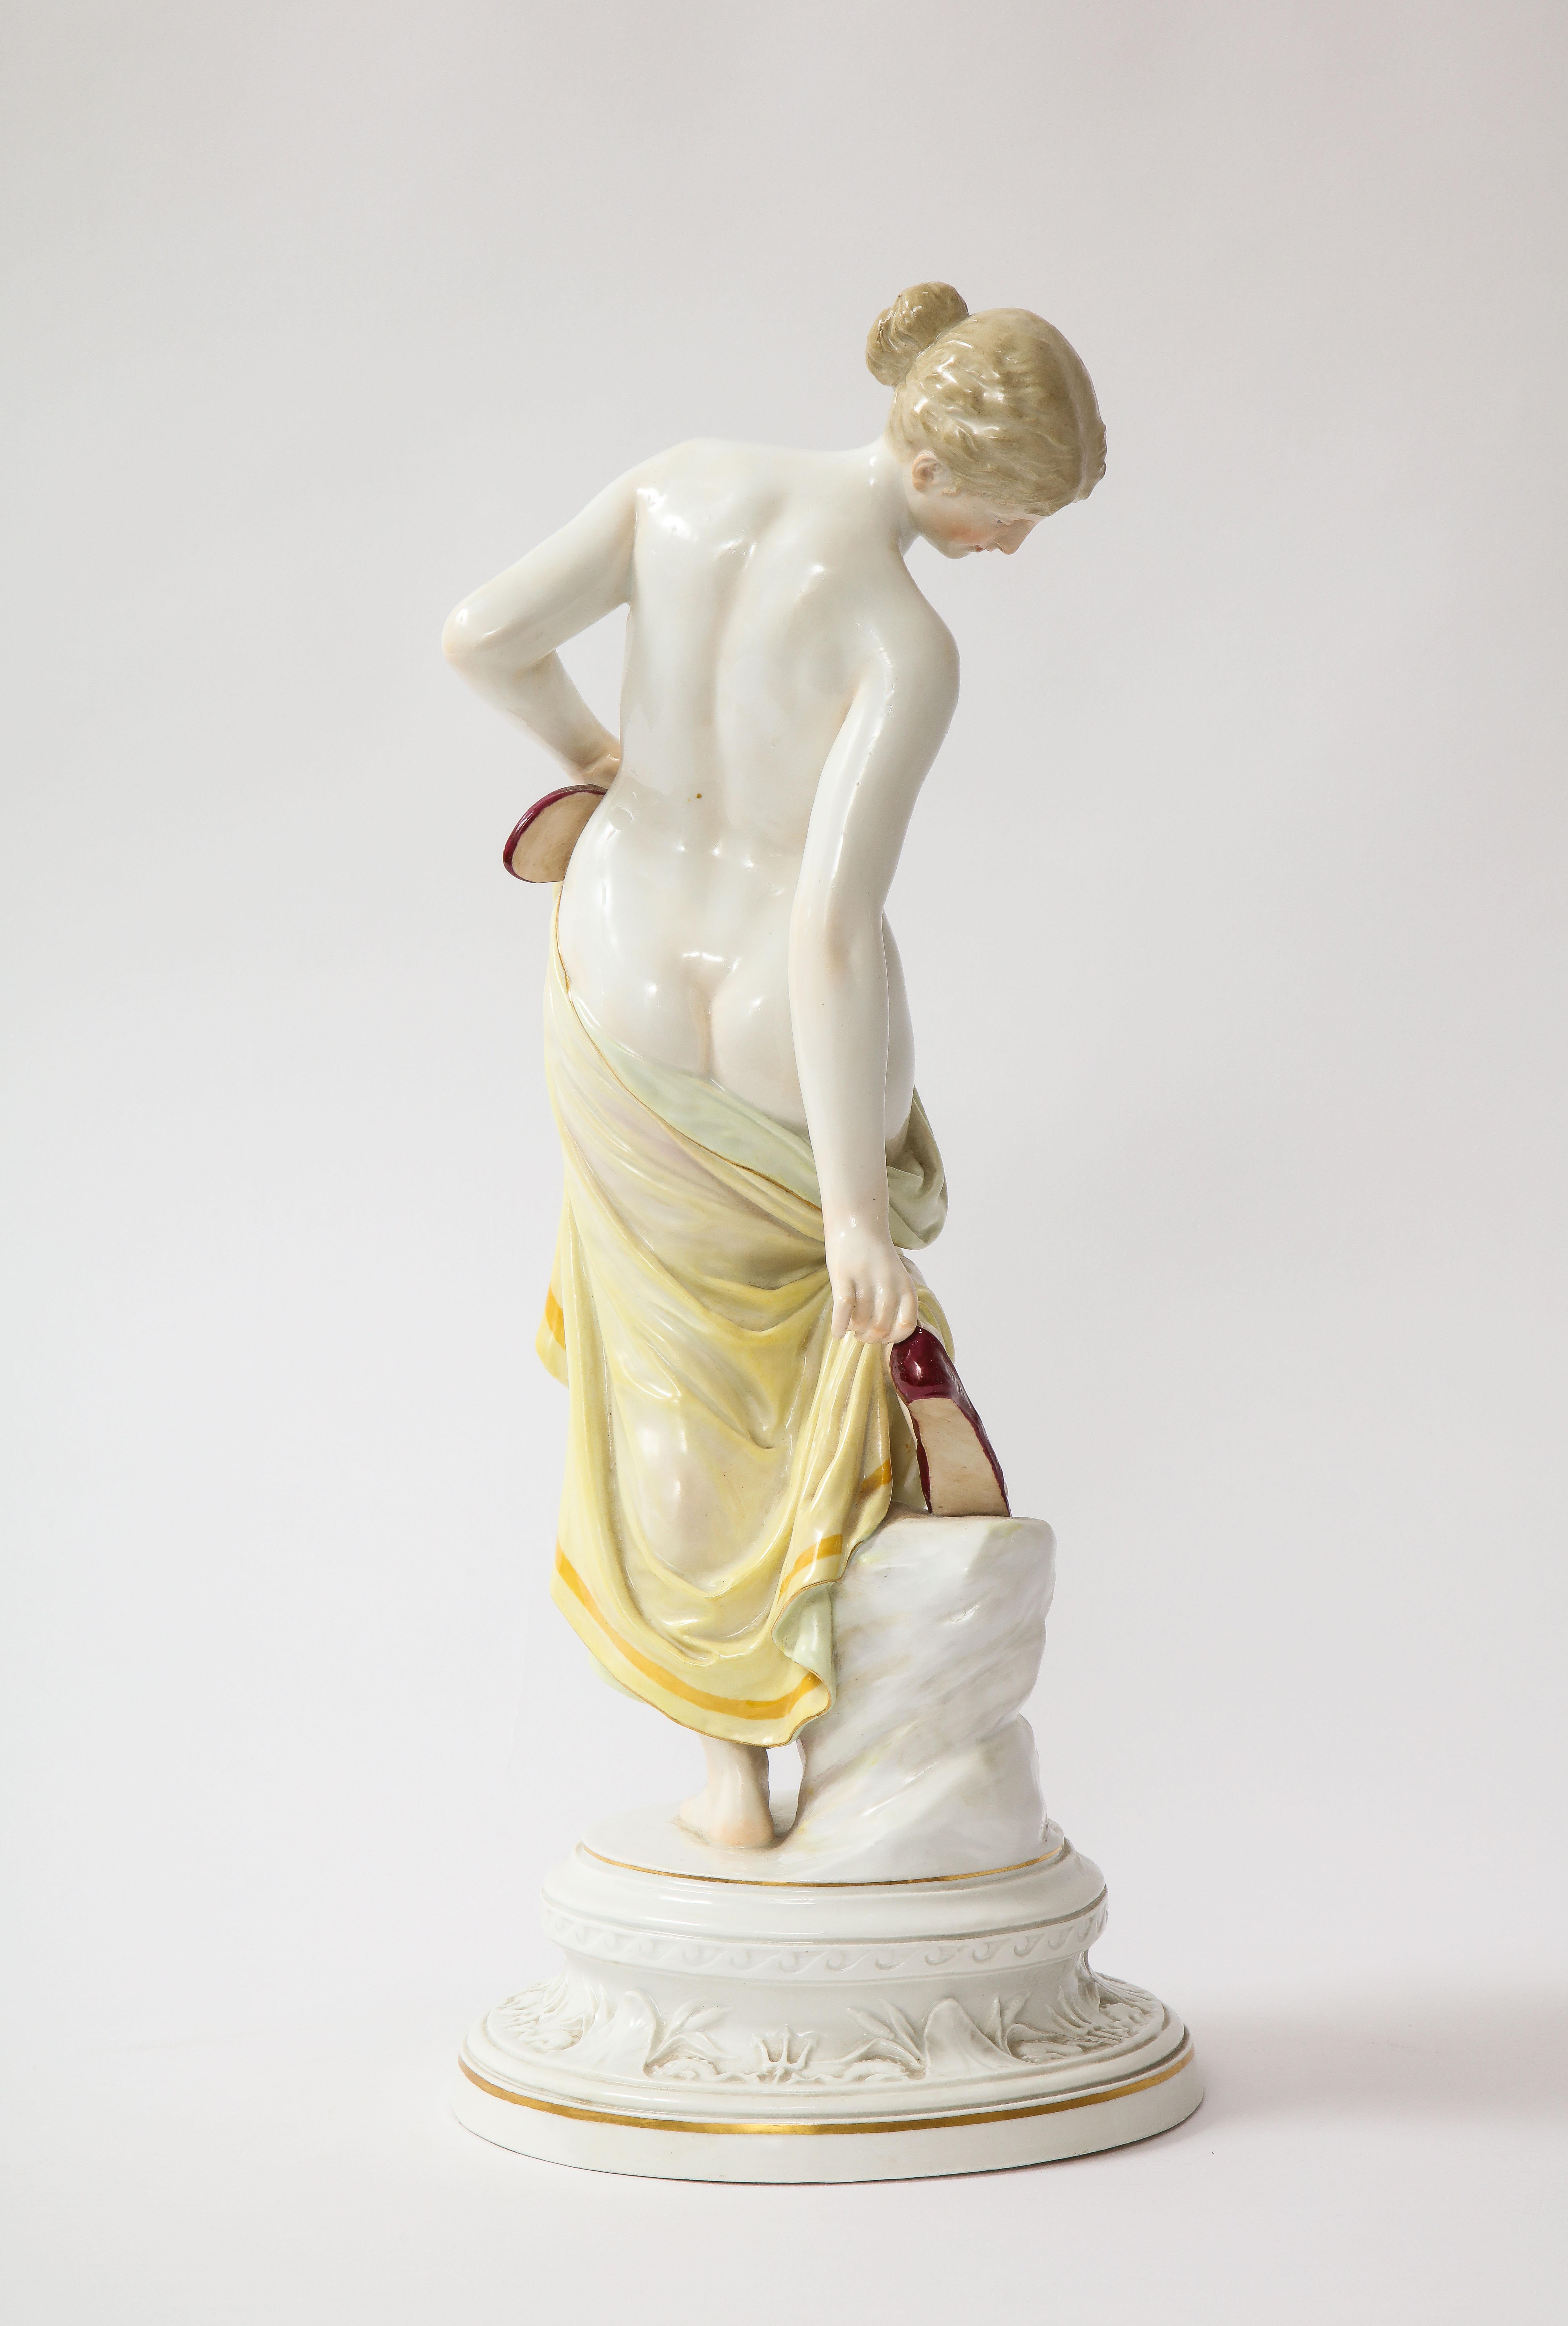 German A 19th C. Meissen Porcelain Female Nude Figurine After The Bath, R. Ockelmann For Sale